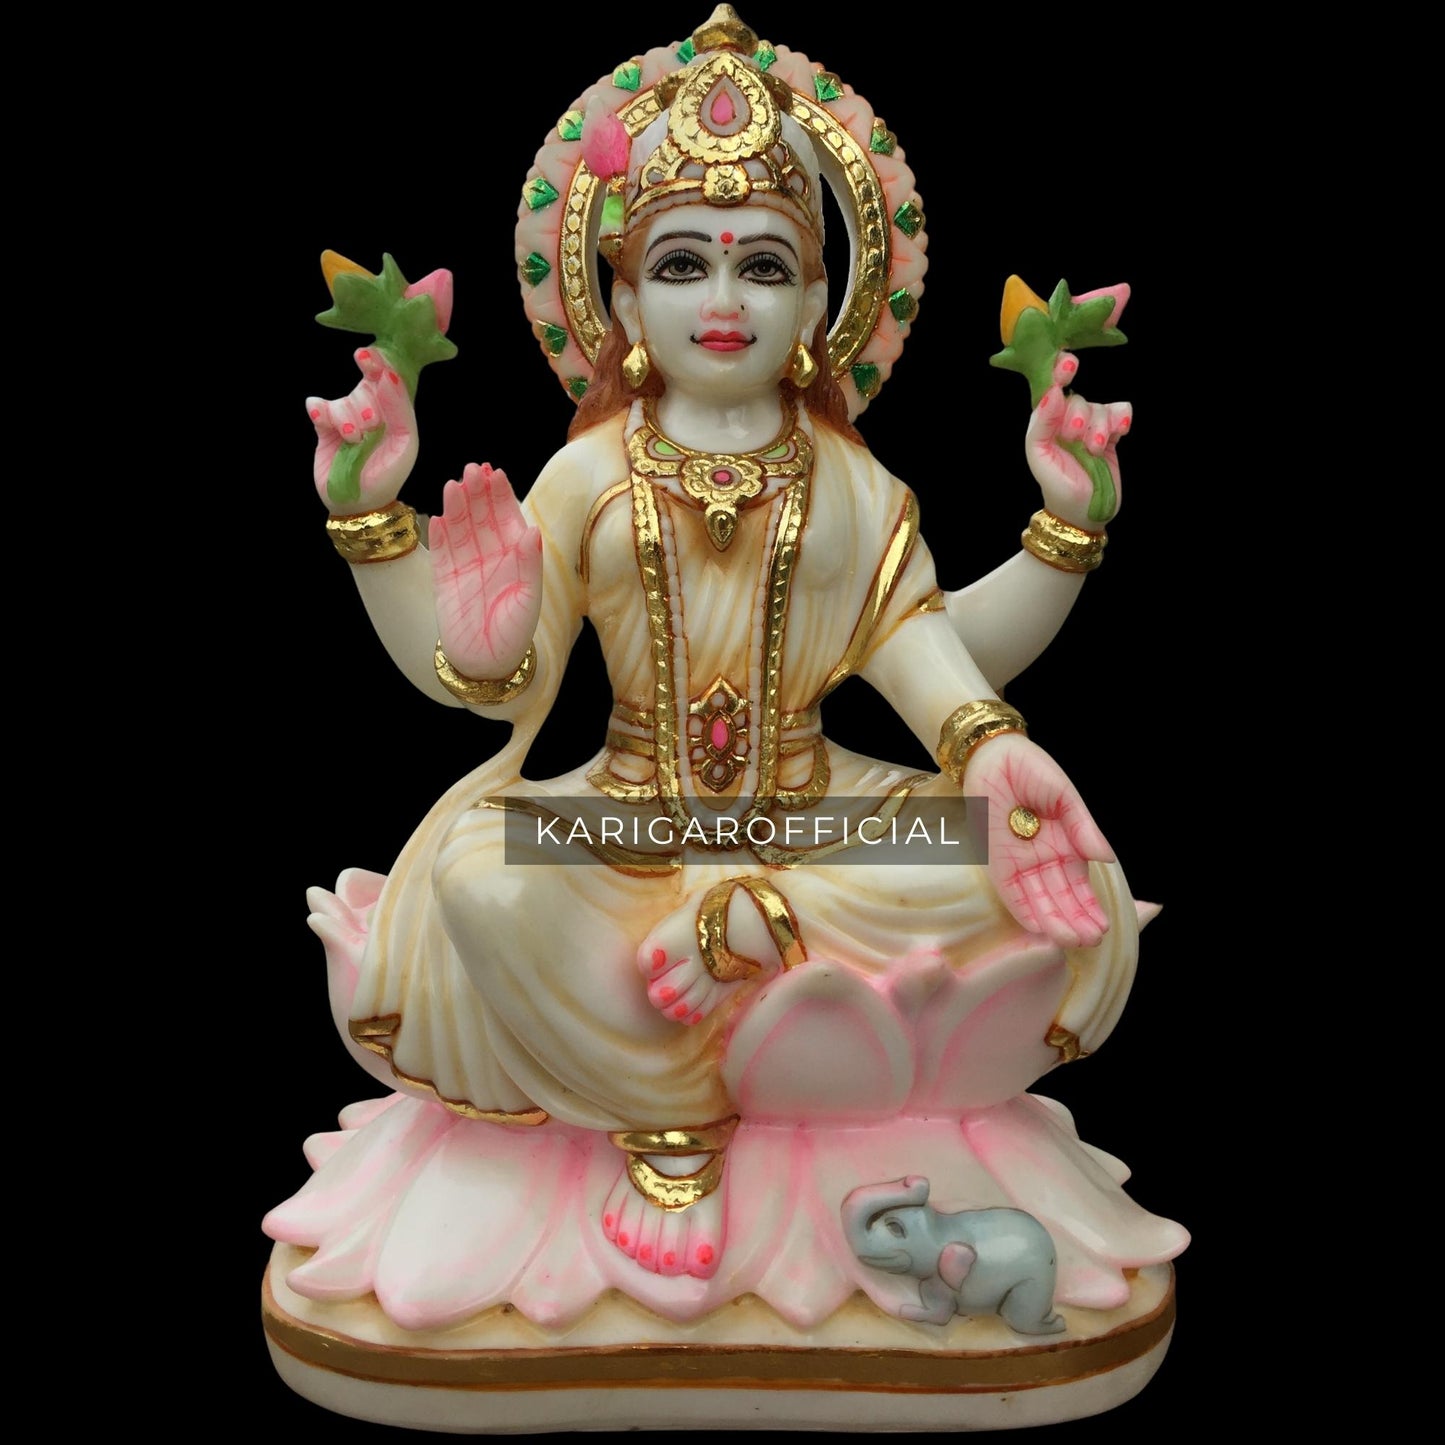 Lakshmi statue 12 inches Marble goddess Indian goddess Big Lakshmi Statue, Big Marble Figurine of Laxmi, goddess of wealth, Immortal nectar, Laxmi idol, Lakshmi sculpture Home decor Anniversary gifts